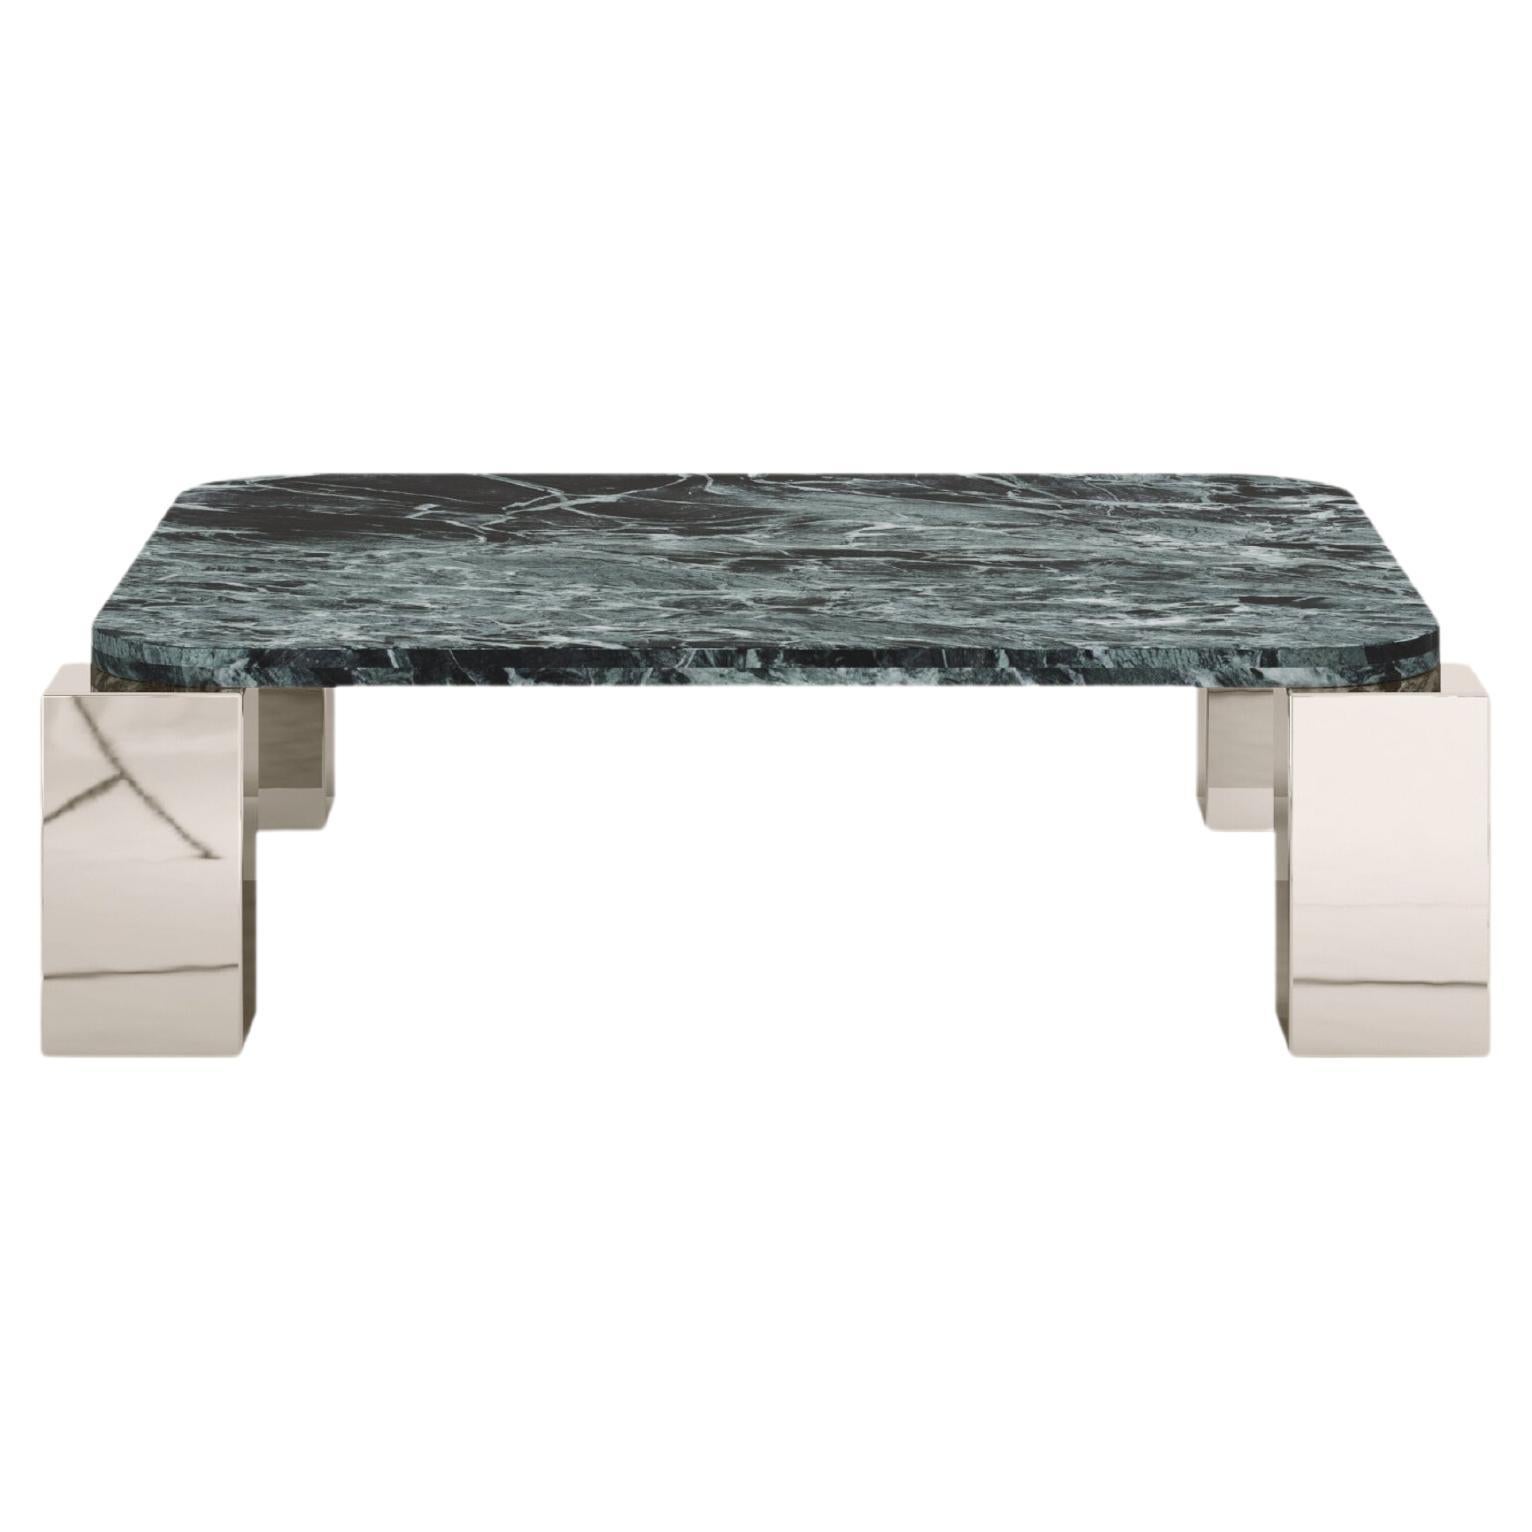 FORM(LA) Cubo Square Coffee Table 56”L x 56"W x 14”H Verde Alpi Marble & Chrome For Sale